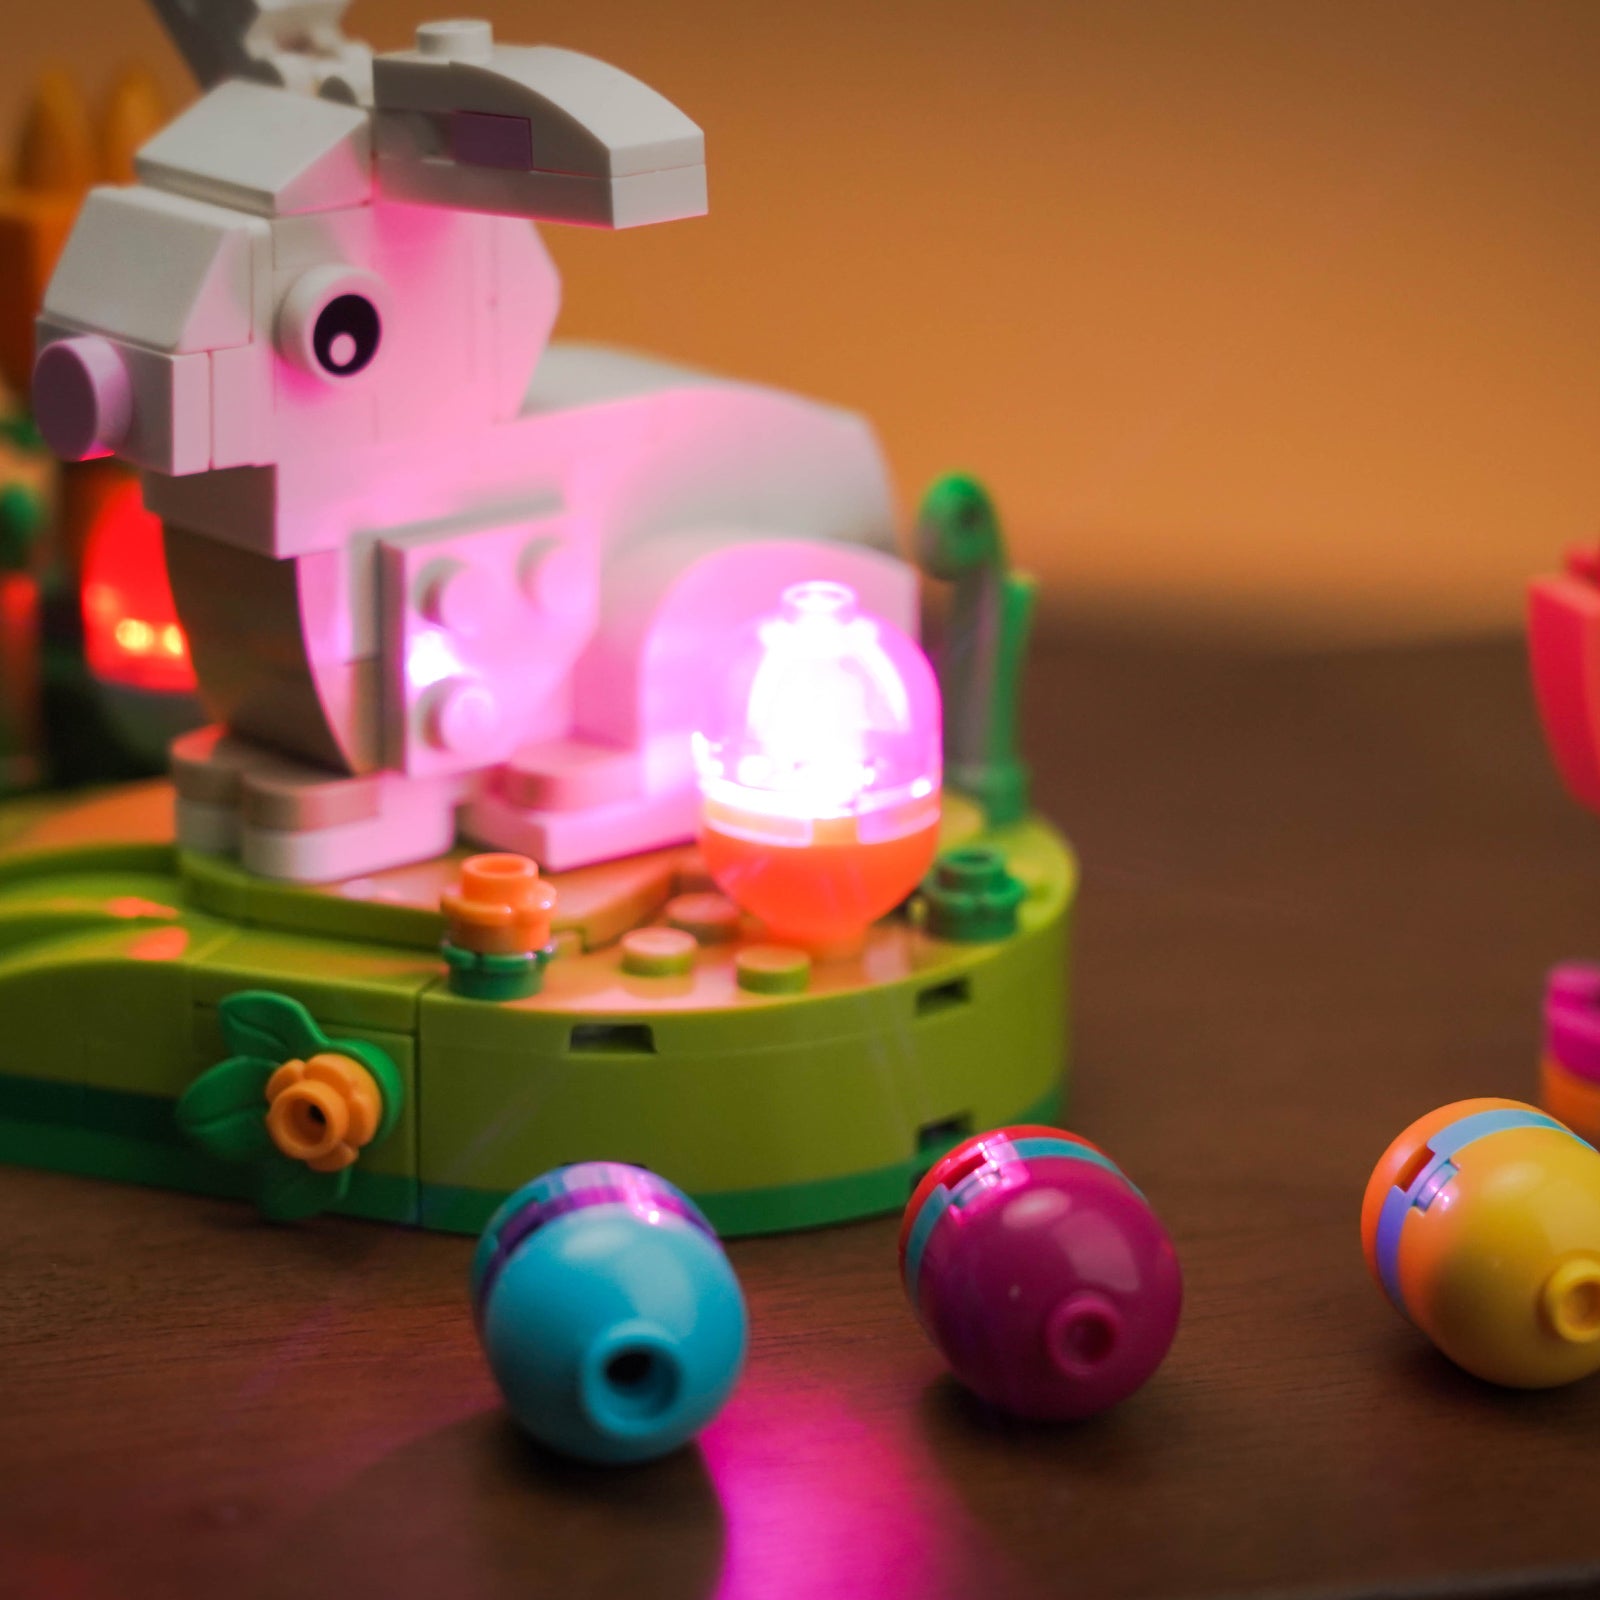 Detailed Display of BrickBling Light Kit for LEGO Easter Rabbits Display 40523